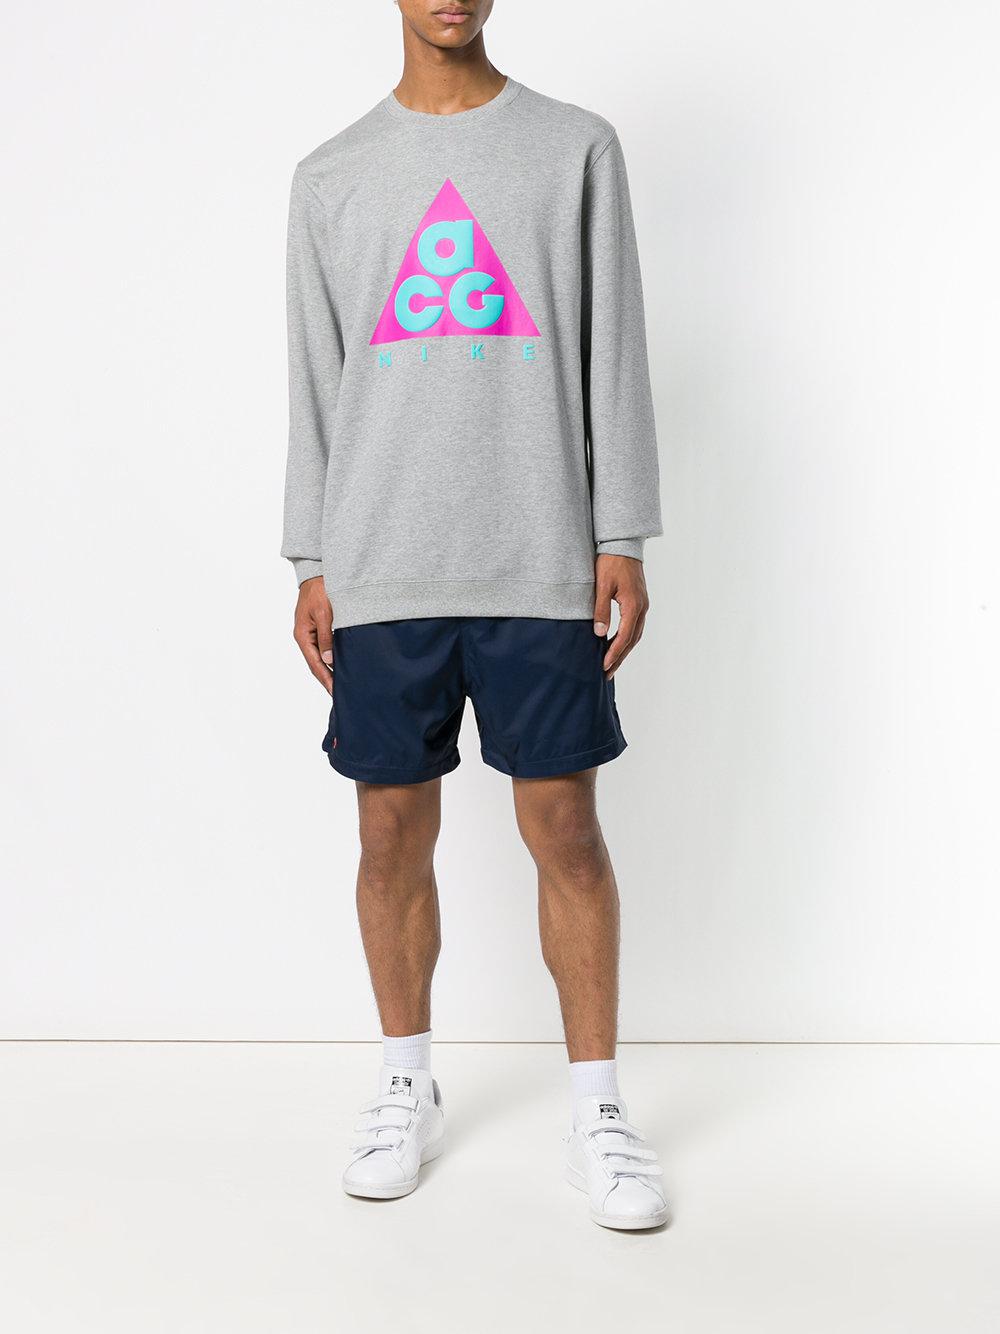 Nike Cotton Acg Sweatshirt Qs in Grey (Gray) for Men | Lyst